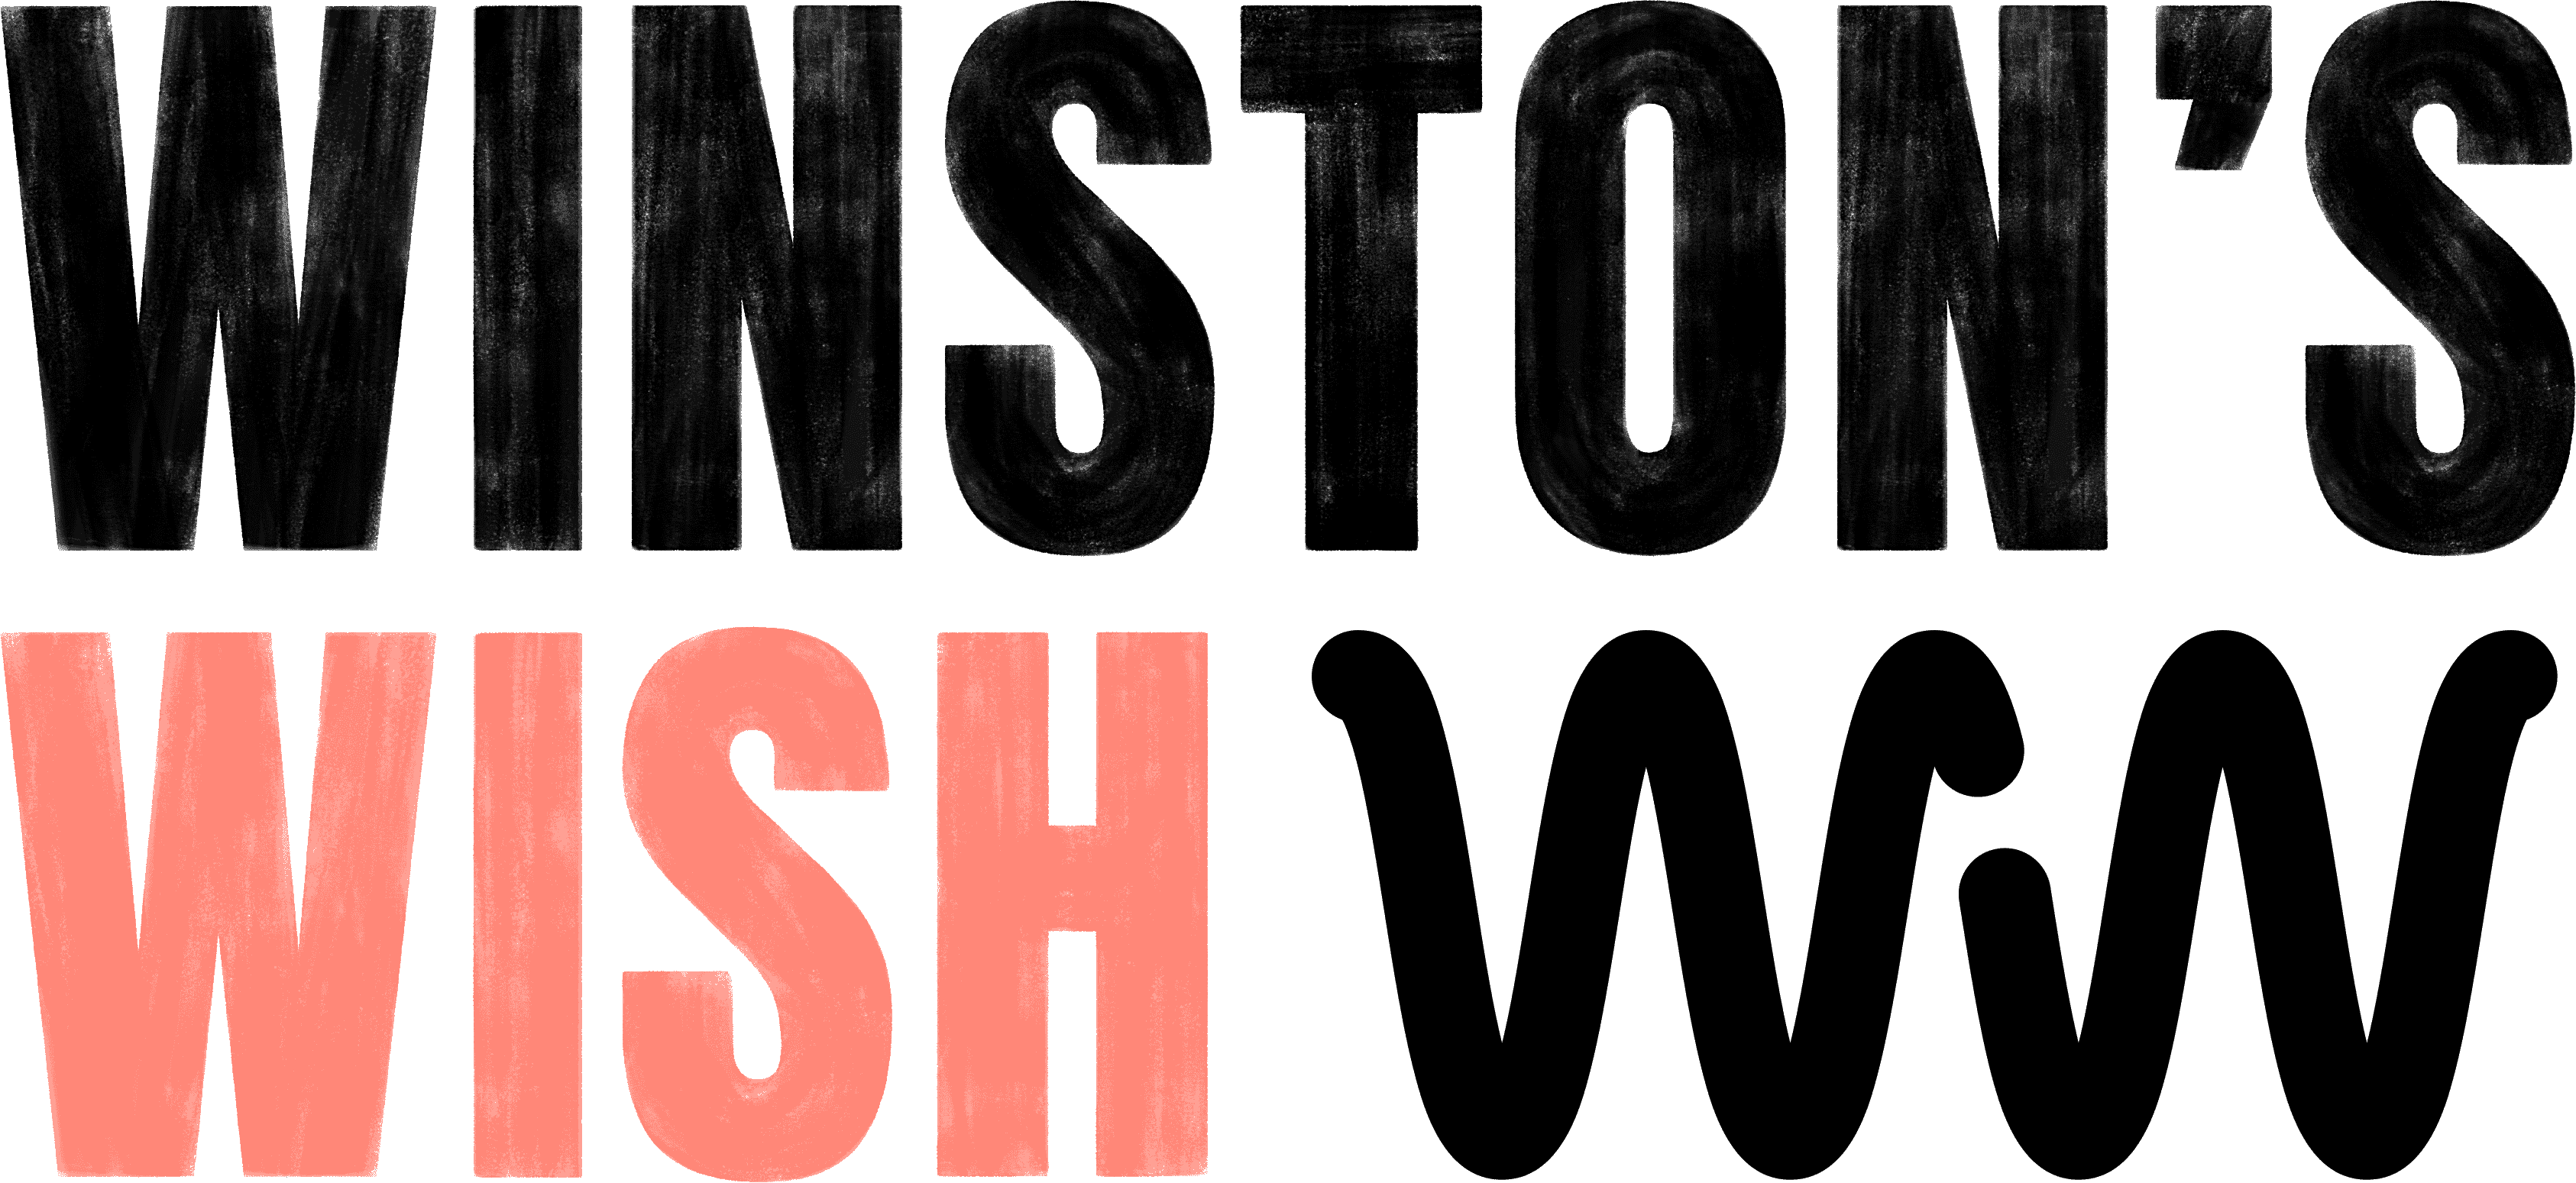 Winston's Wish